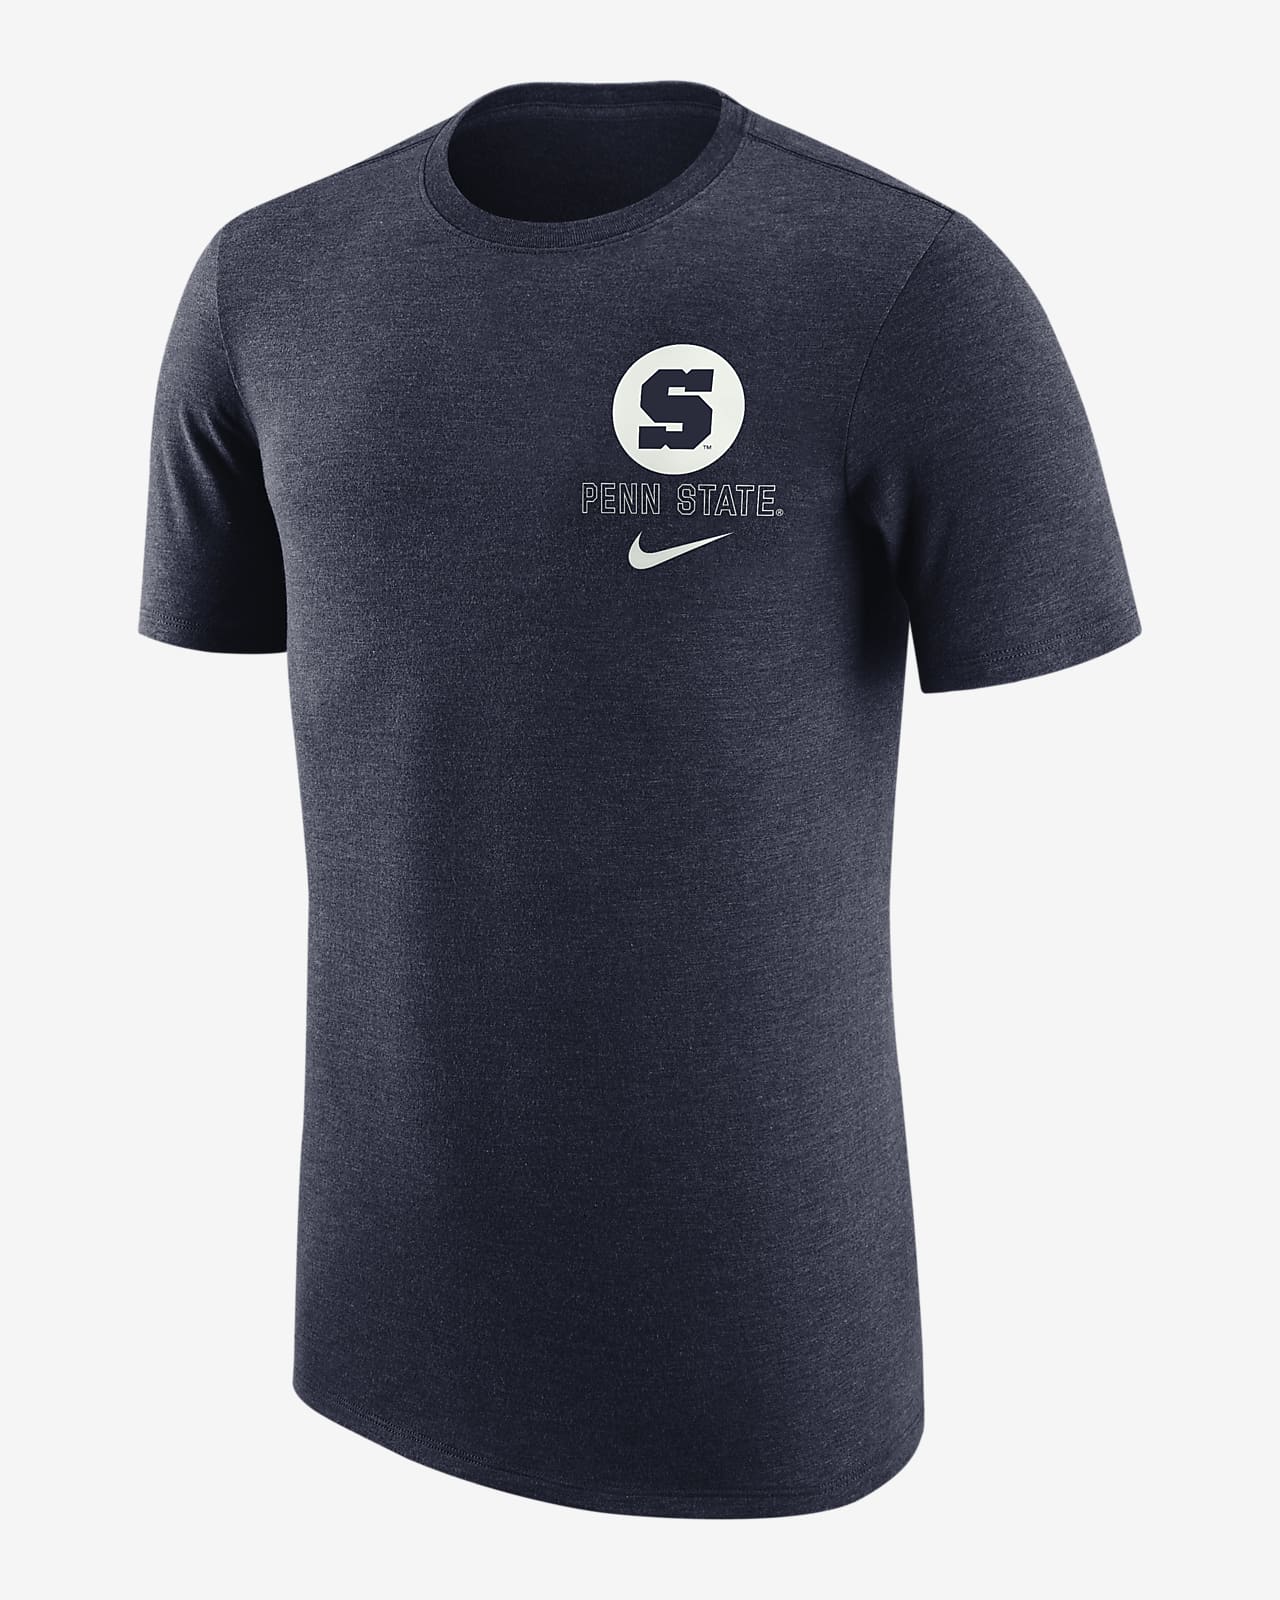 Penn State Men's Nike College Crew-Neck T-Shirt